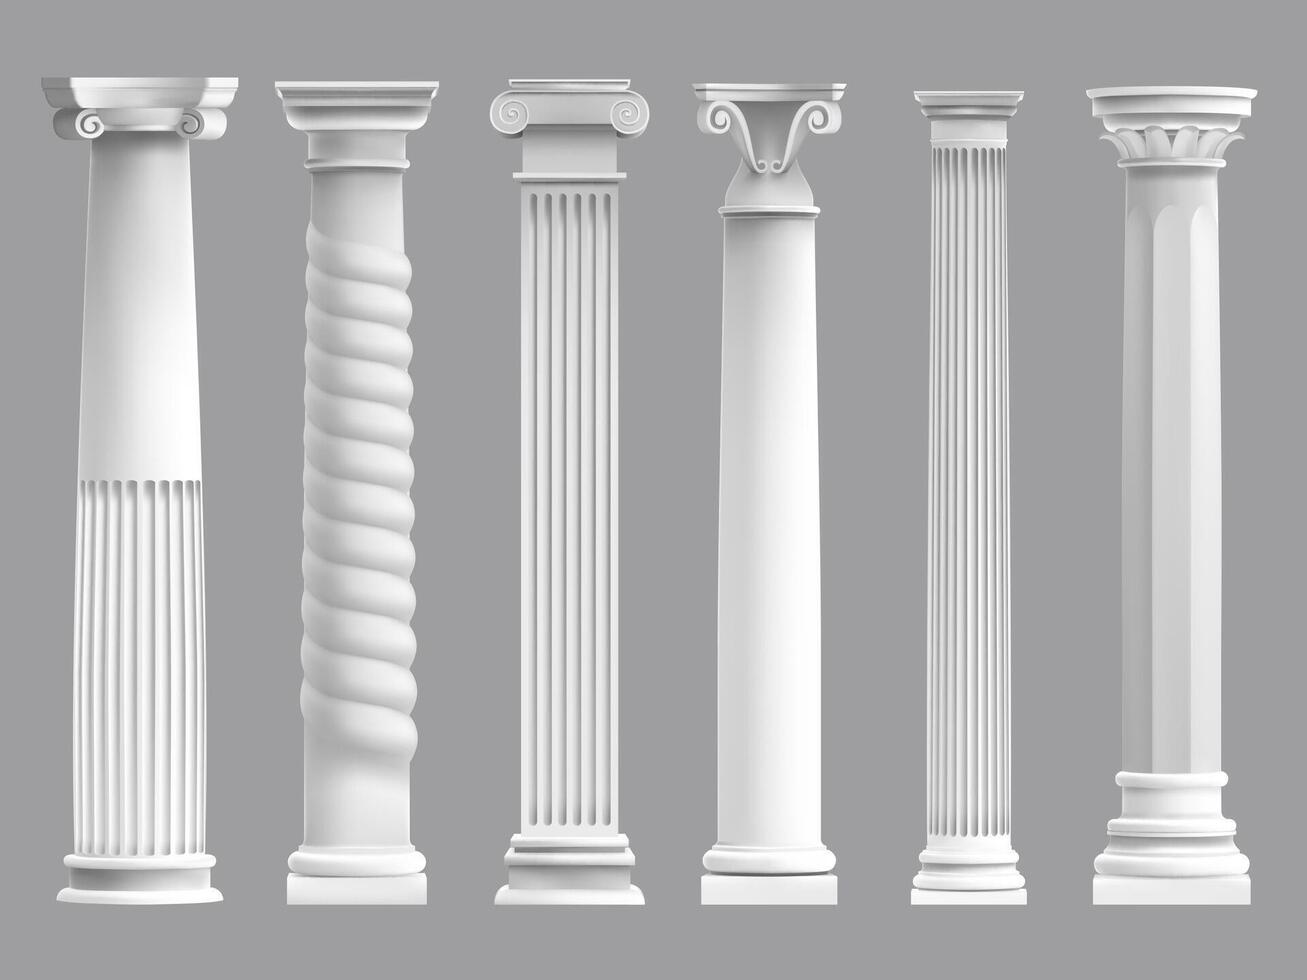 Antique greek pillars. Greek ancient column, historic roman culture pillars. Architectural classic columns vector illustration set